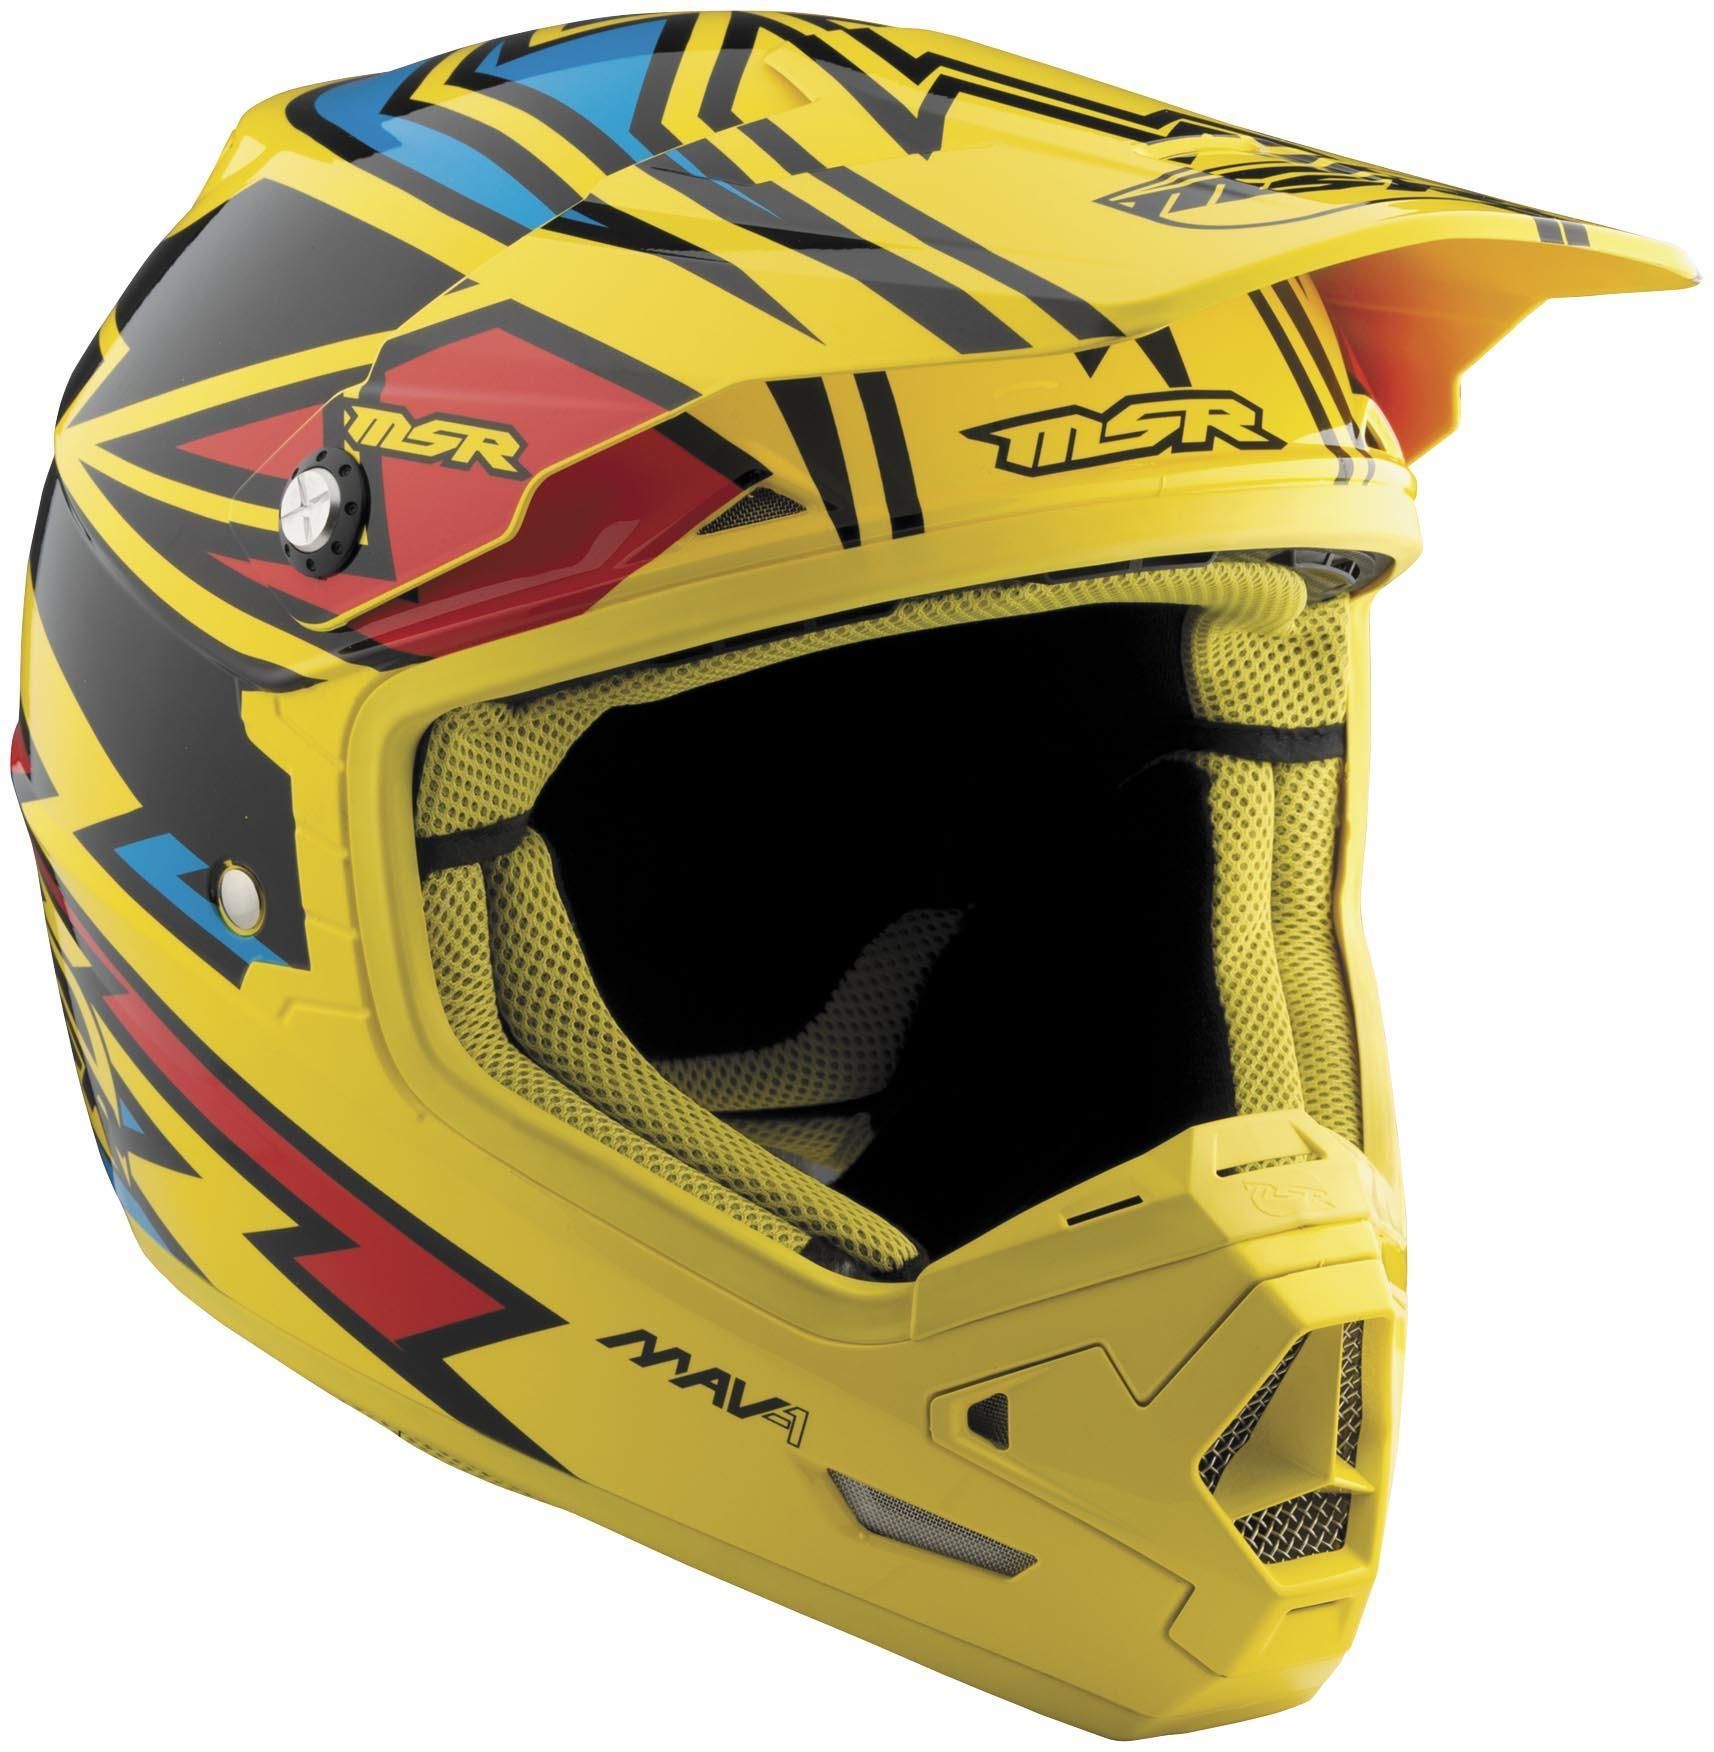 45XN-MSR-359323 Chin Vent for 2014 MAV1 Helmet - Twisted